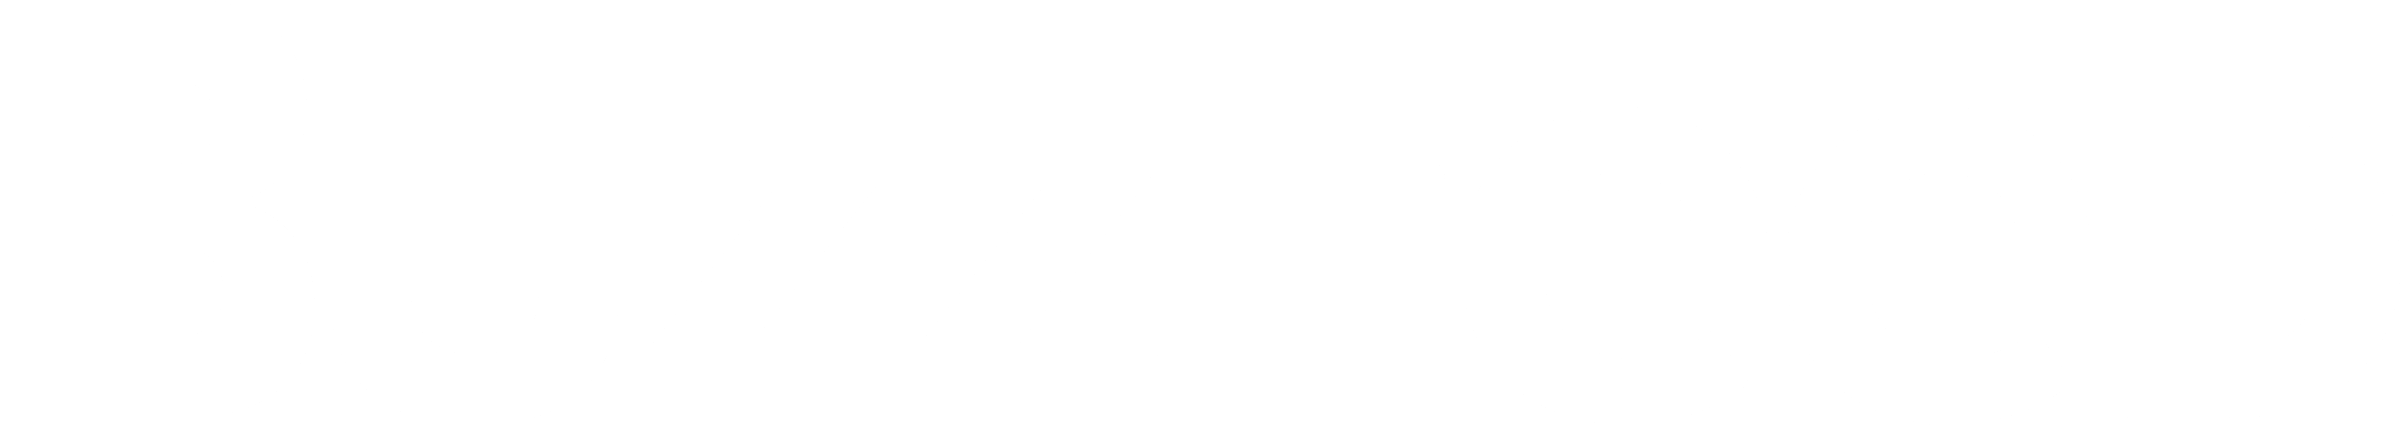 BuzzFeed Logo - BuzzFeed Logo PNG Transparent & SVG Vector - Freebie Supply